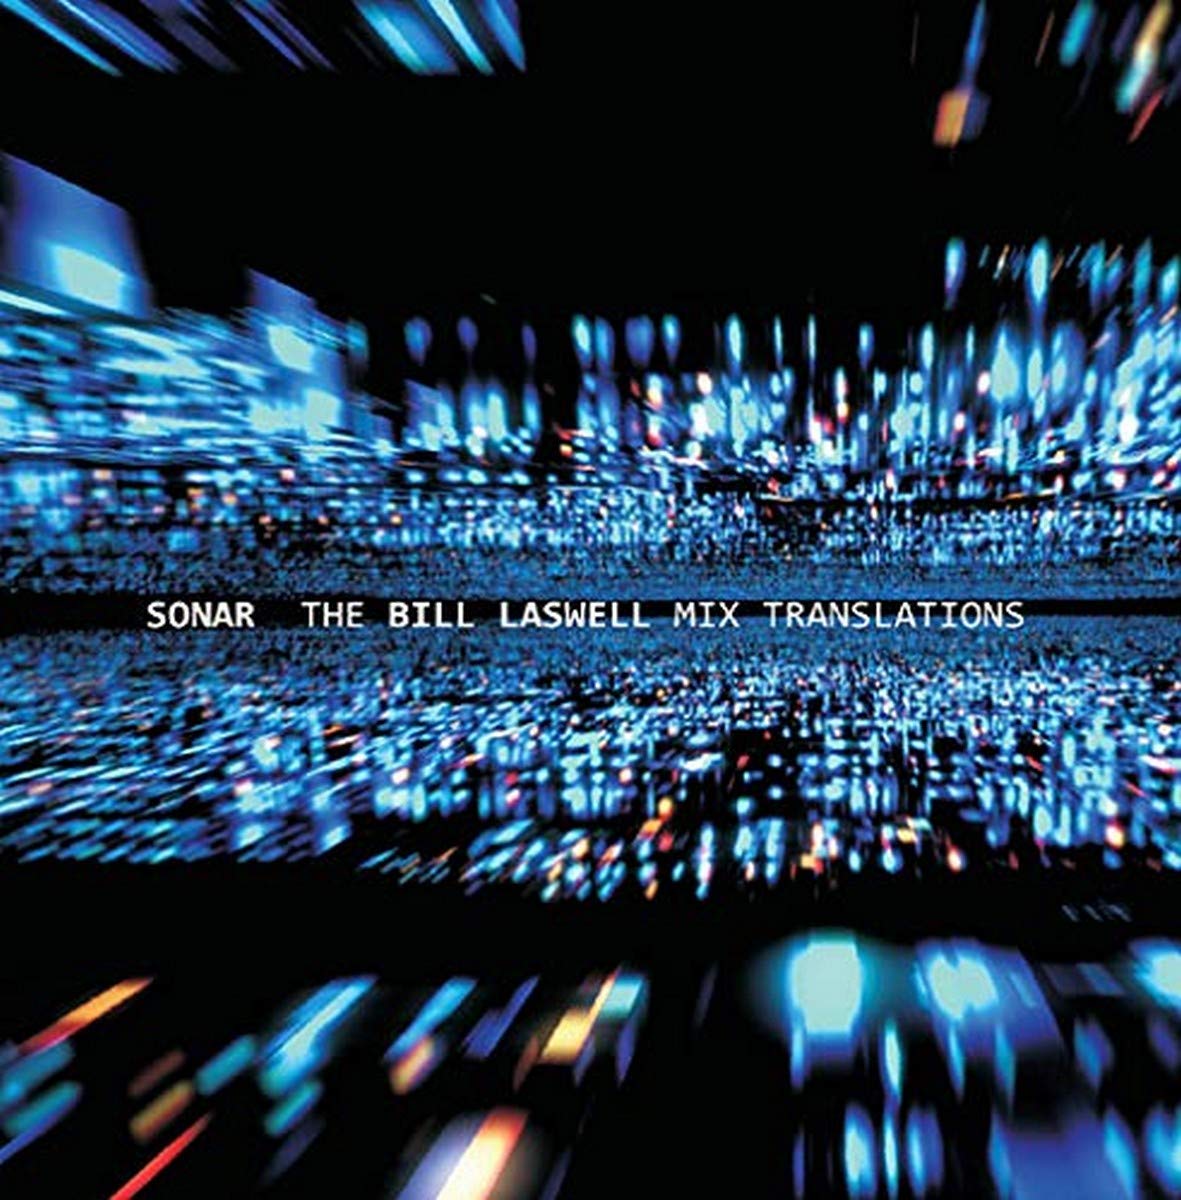 Bill laswell mix translations vinyl lp cds vinyl